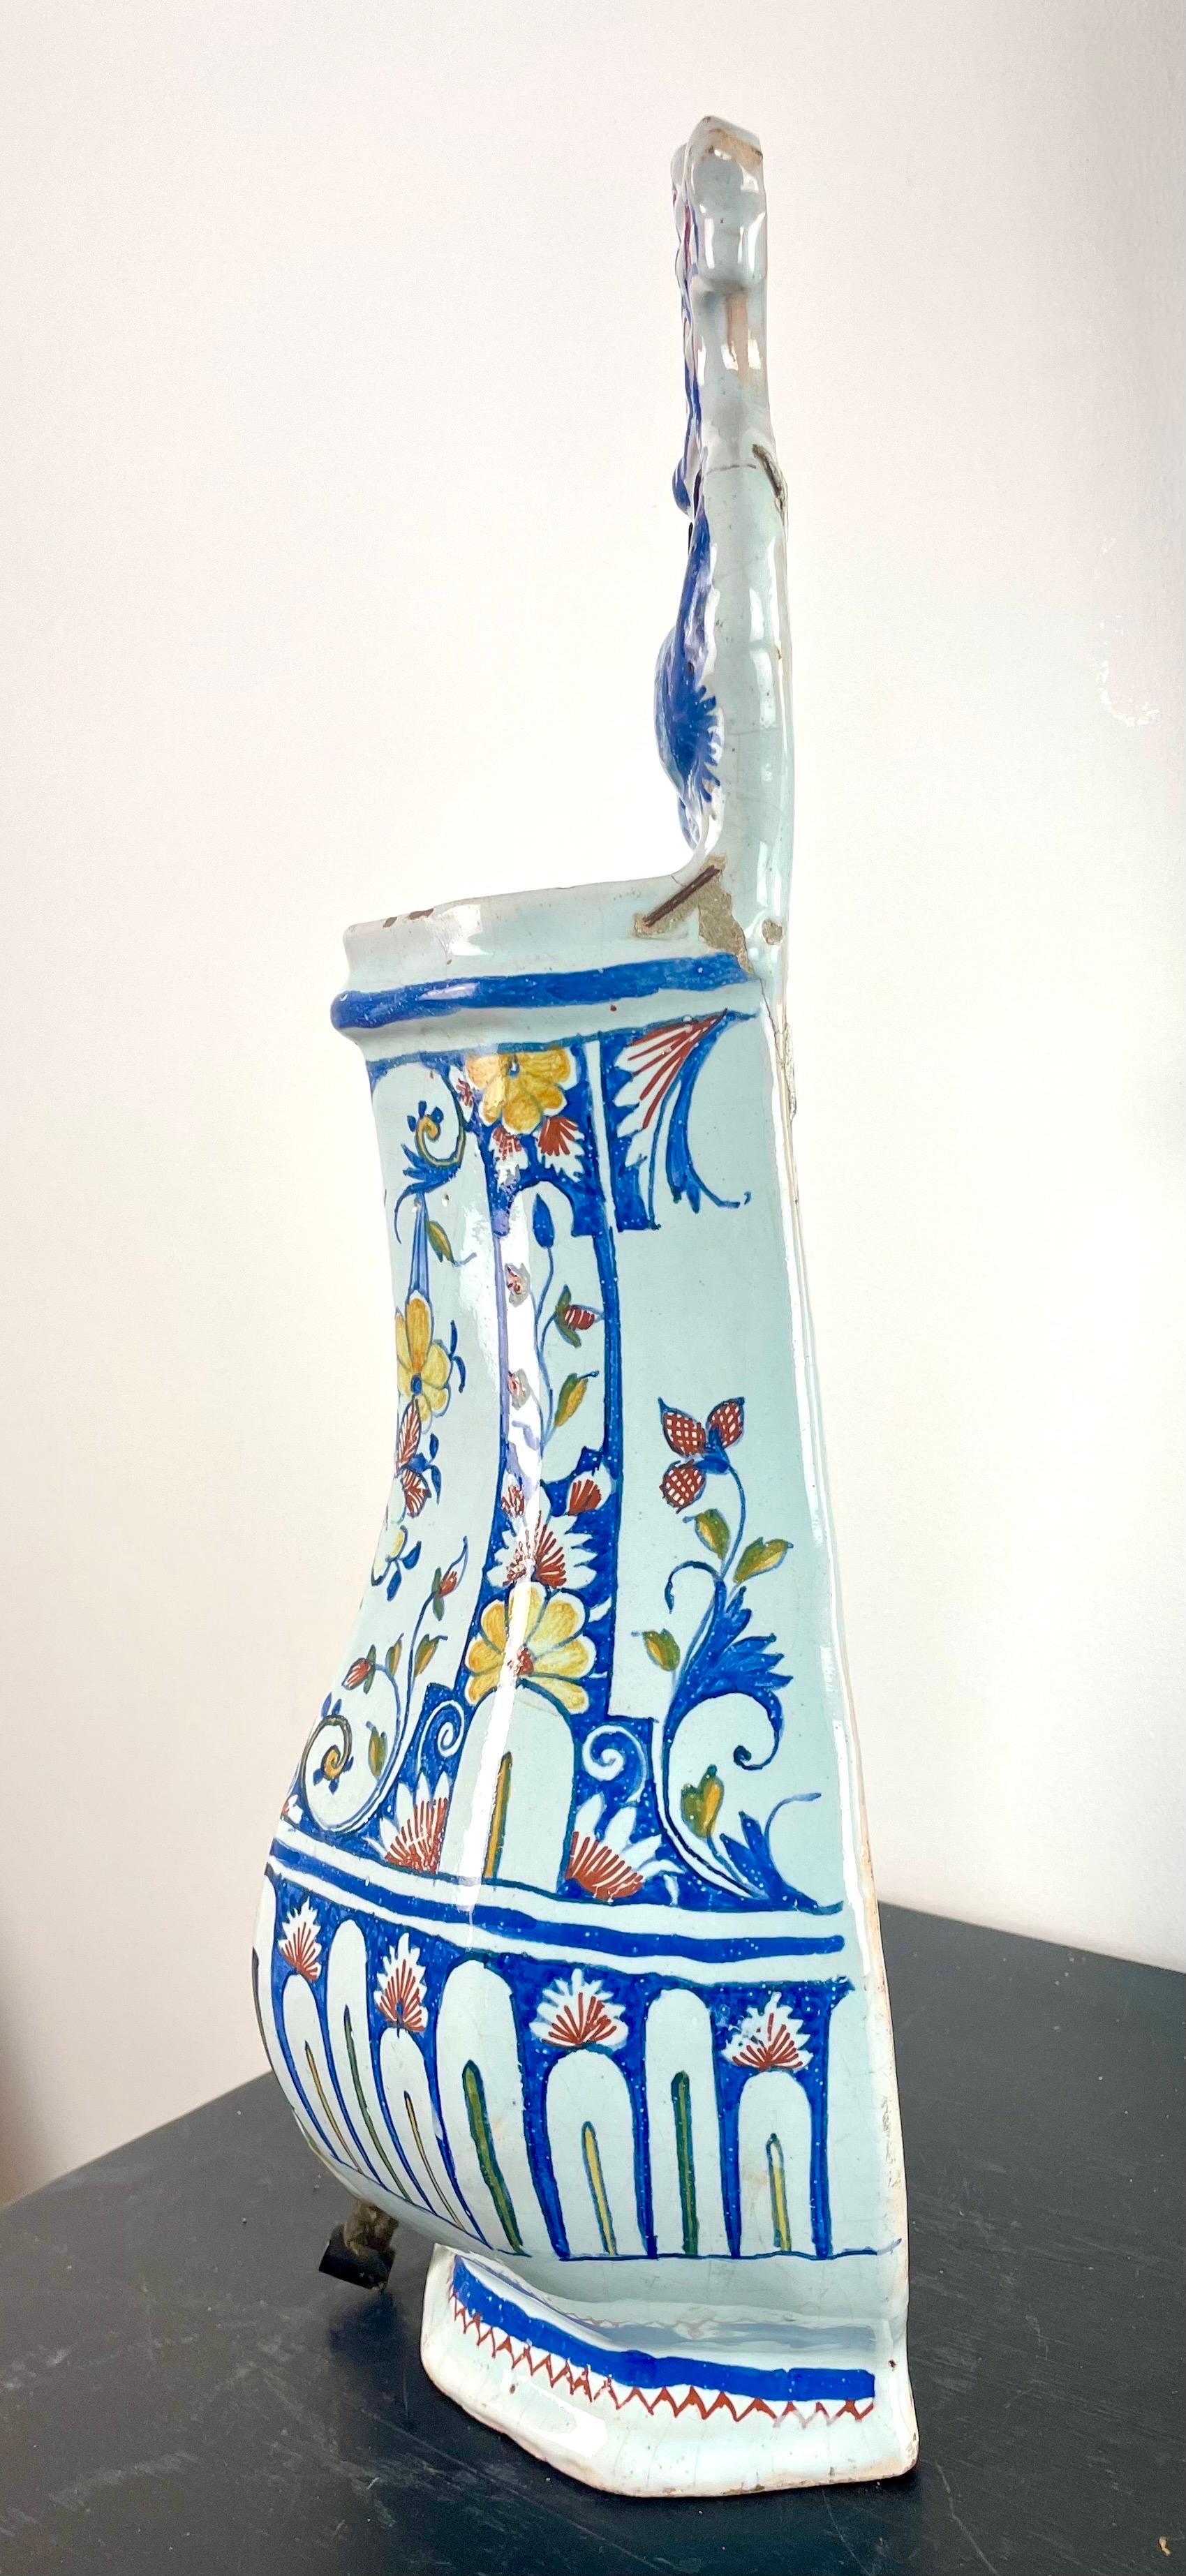 Vase - Rouen earthenware fountain, flower pot - blue white - 18th century France For Sale 1